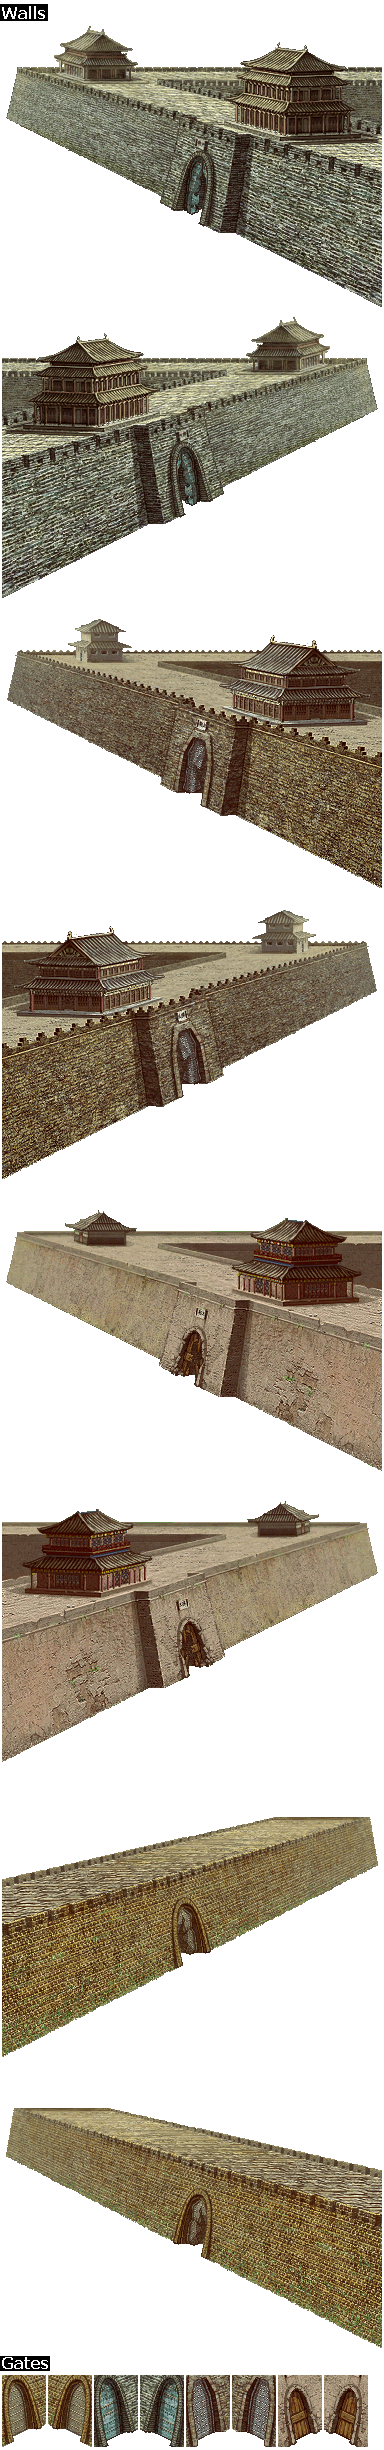 Romance of the Three Kingdoms VIII - City Walls and Gates